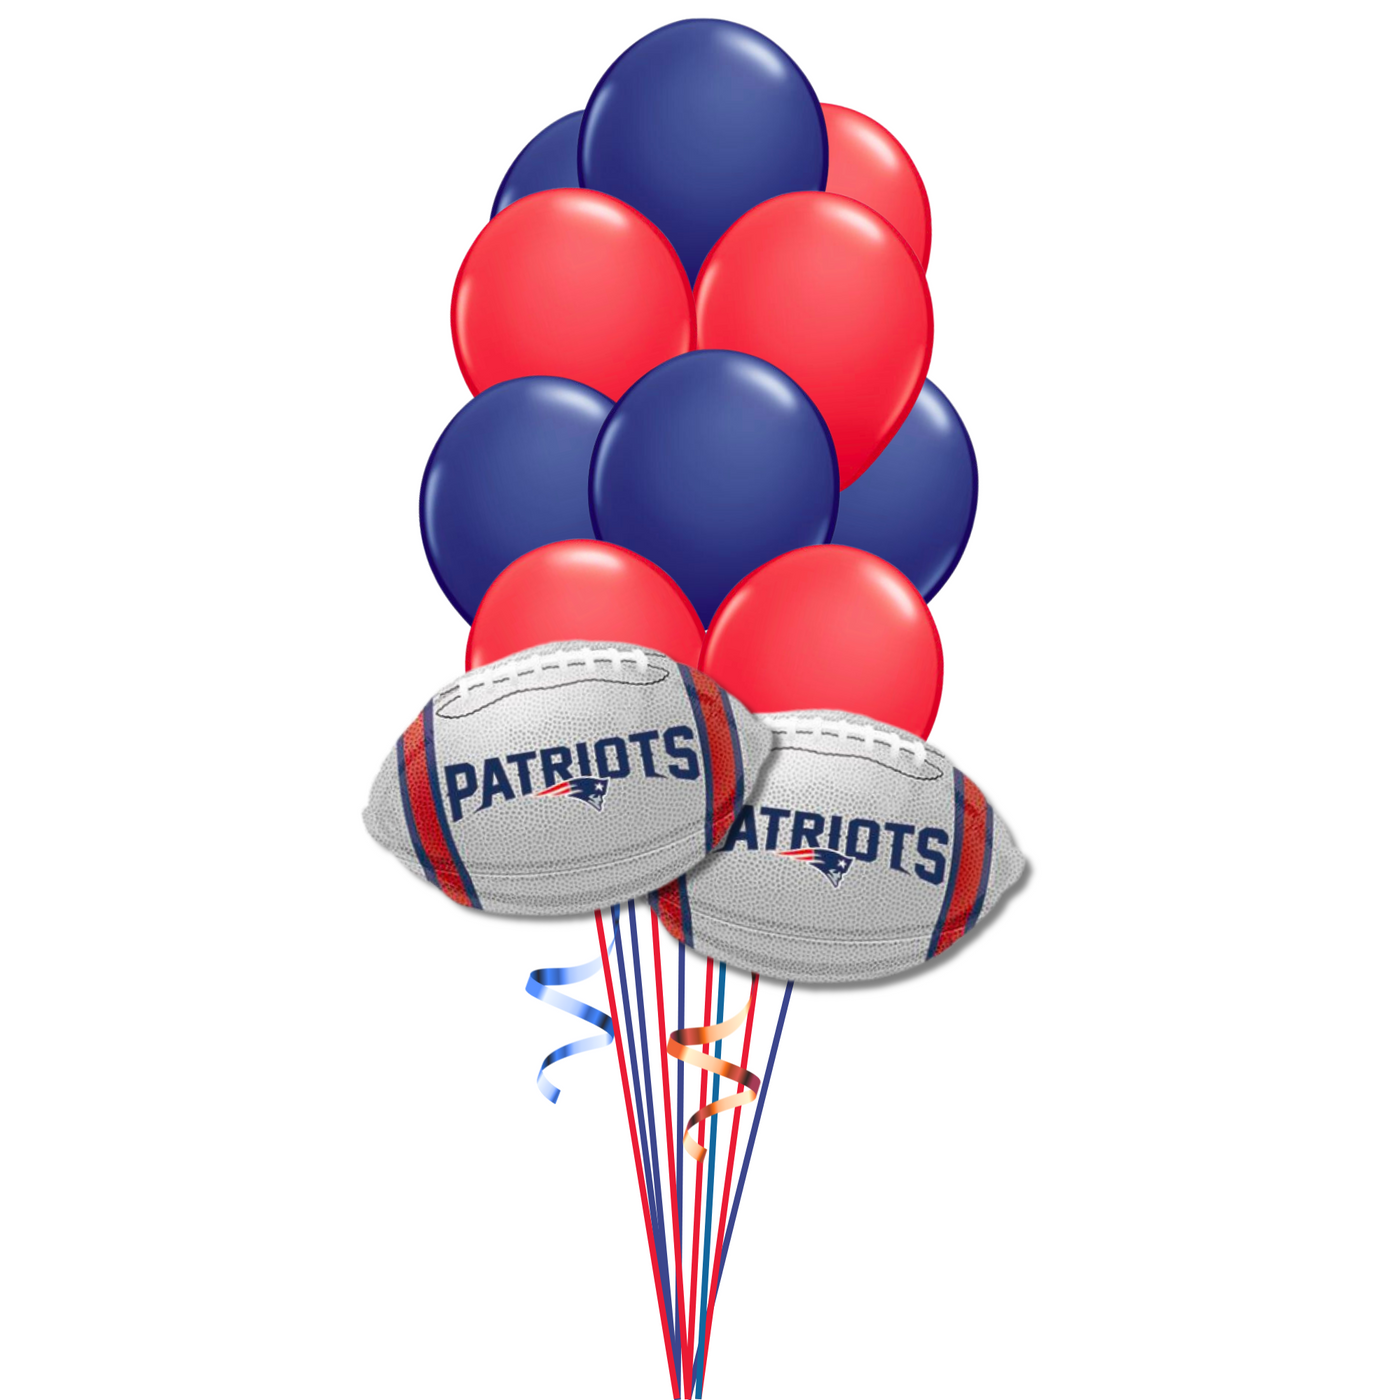 Patriots Helium Balloon Bouquet